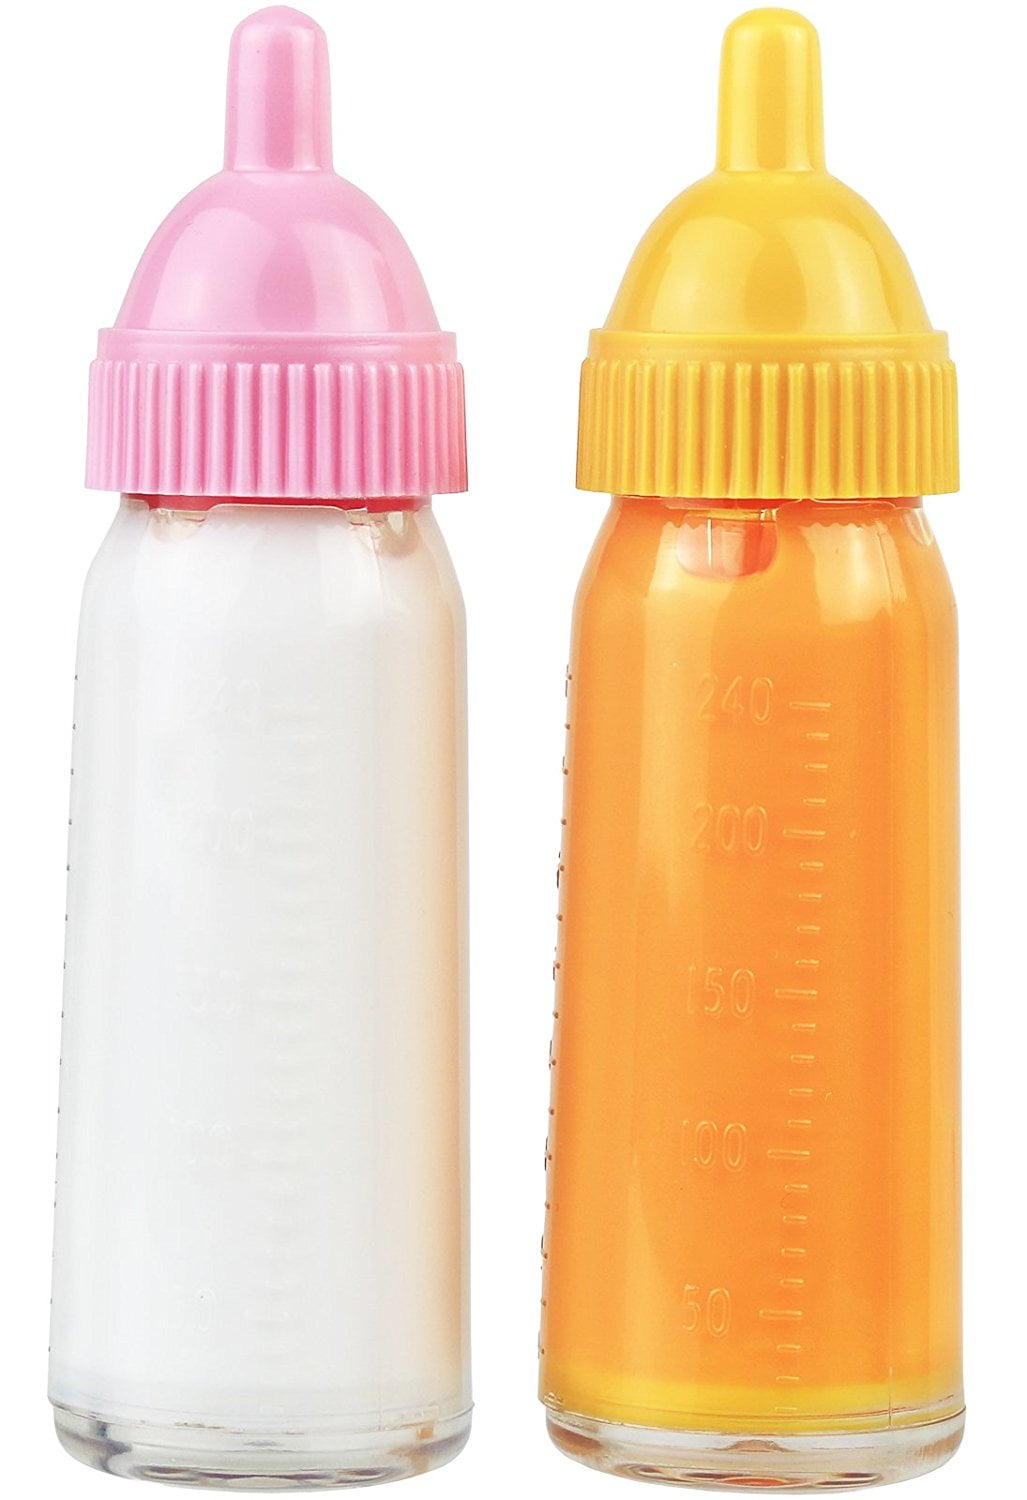 BELTI Baby Dolls Feeding Bottle Magic Bottle Set Disappearing Milk Pretend Play Toy